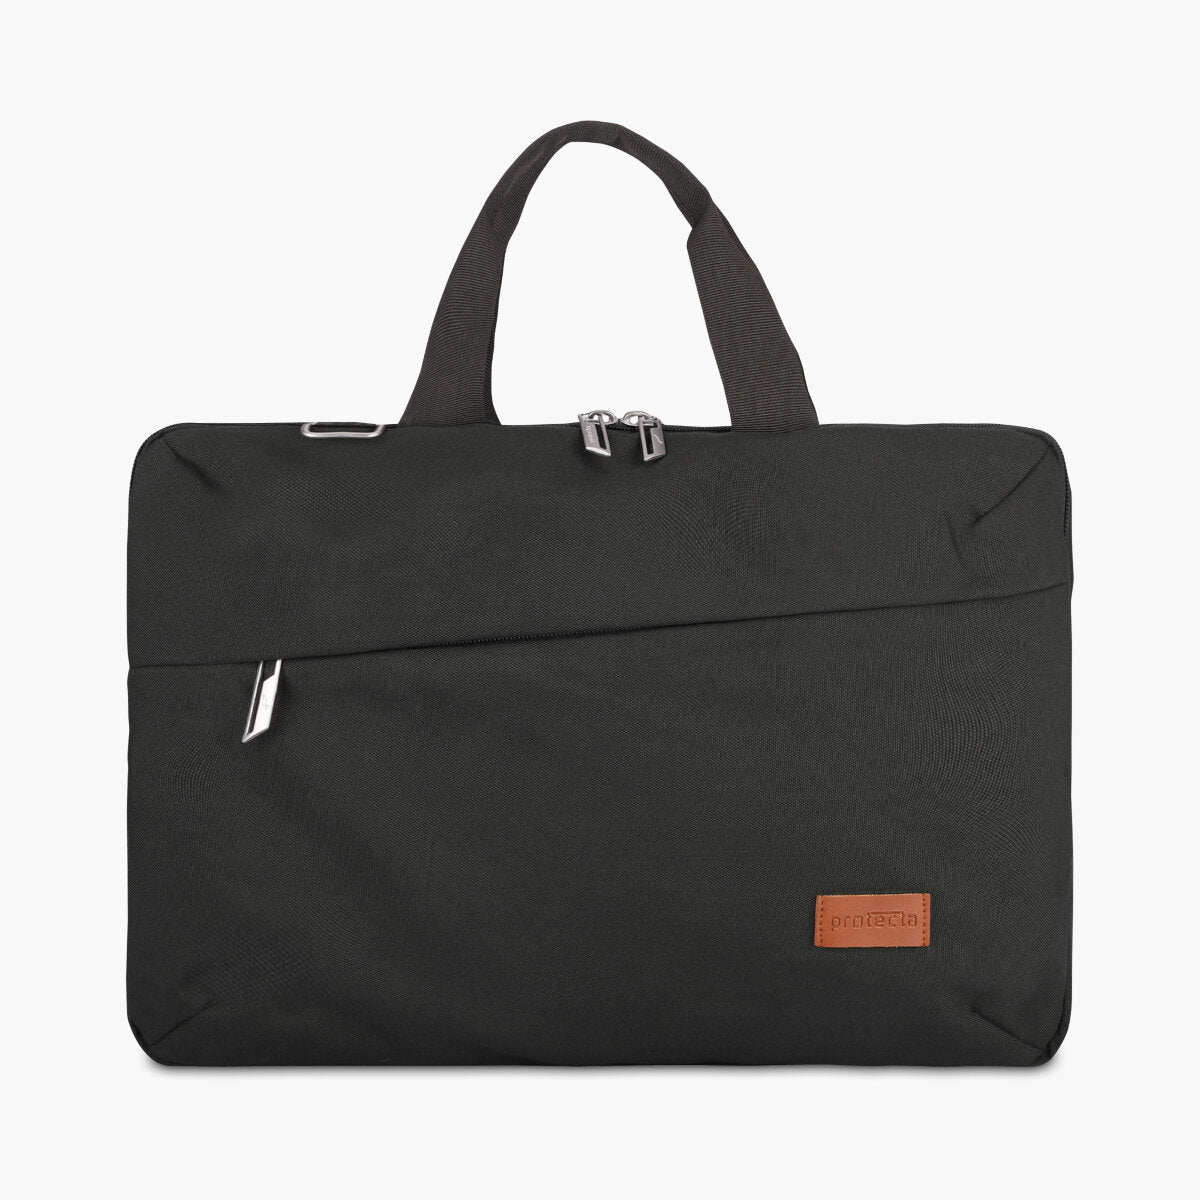 Olive | Protecta High Pedestal Office Laptop Bag - Main